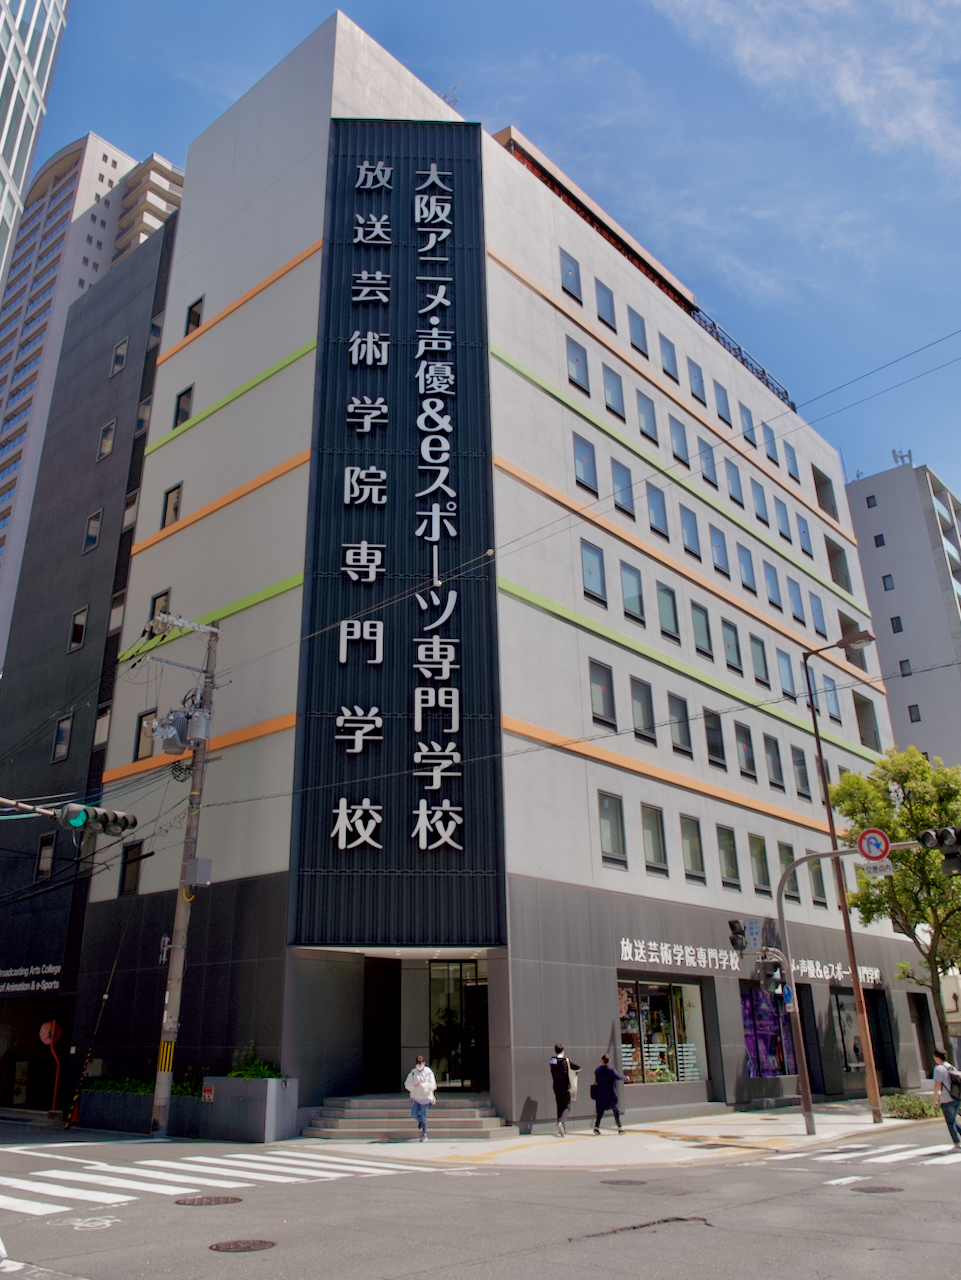 Entrance to the 大阪アニメ・声優&eスポーツ専門学校